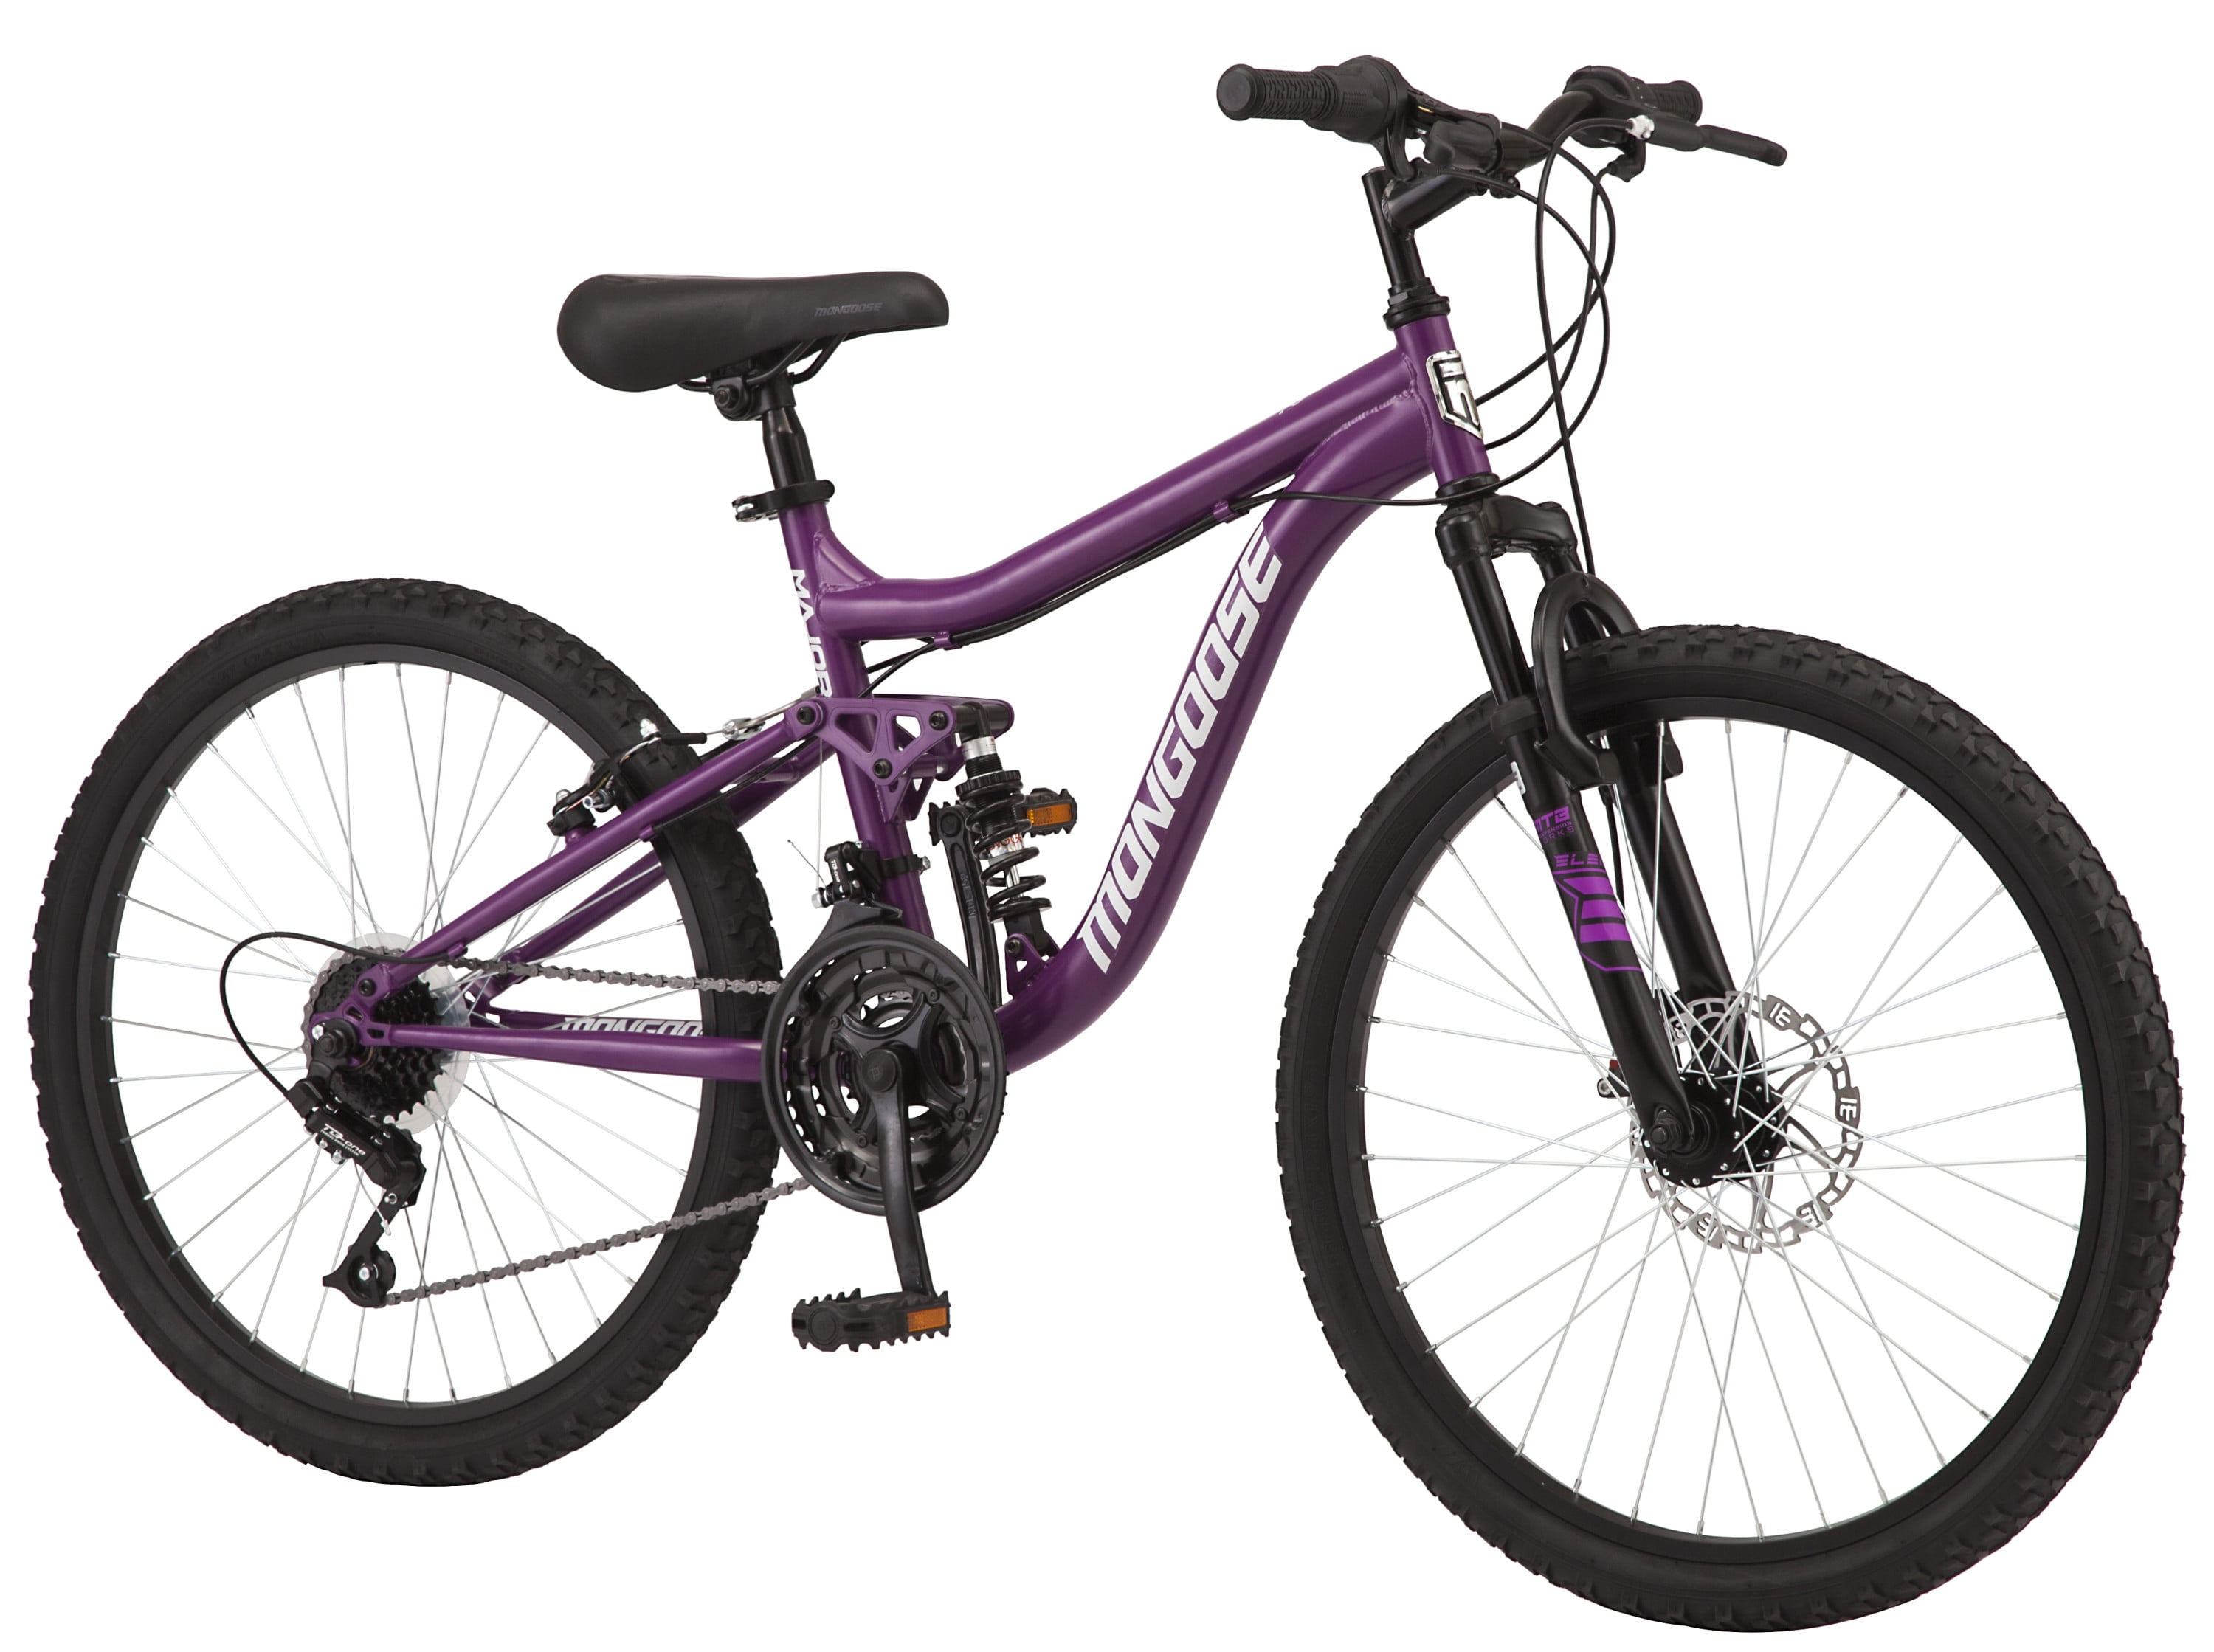 purple mongoose bike